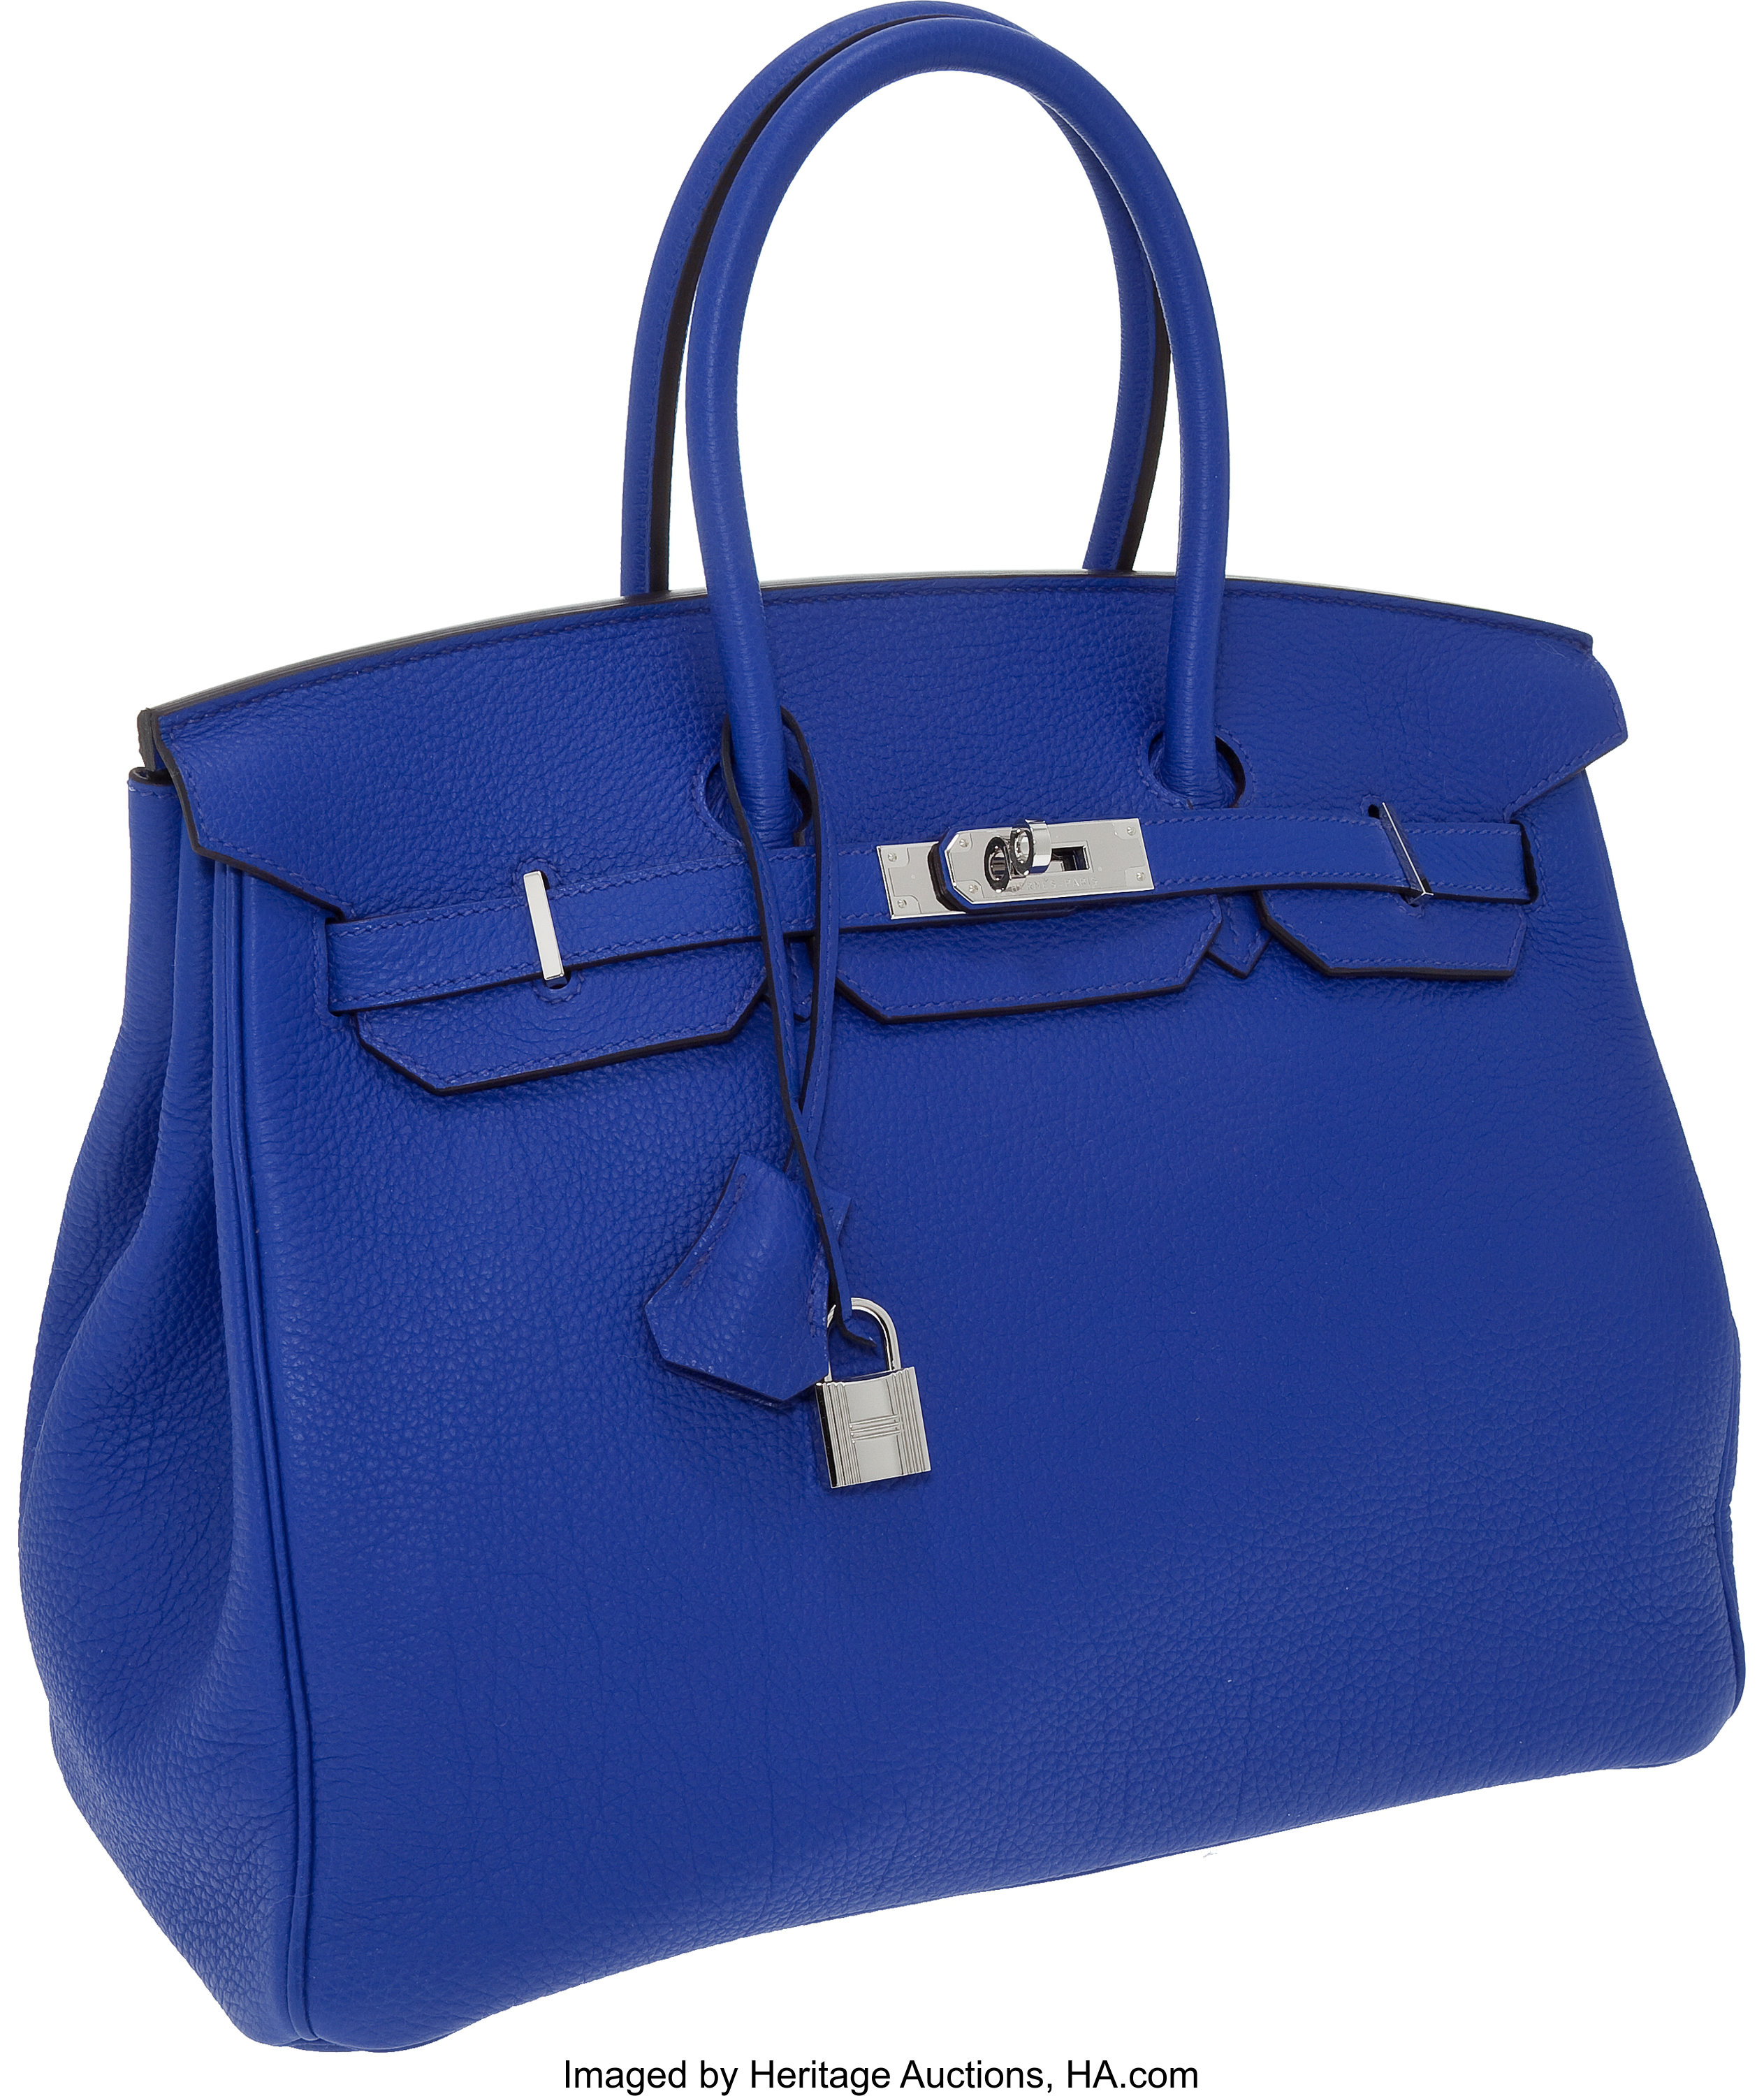 Hermes 35cm Electric Blue Togo Leather Birkin Bag with Palladium | Lot ...